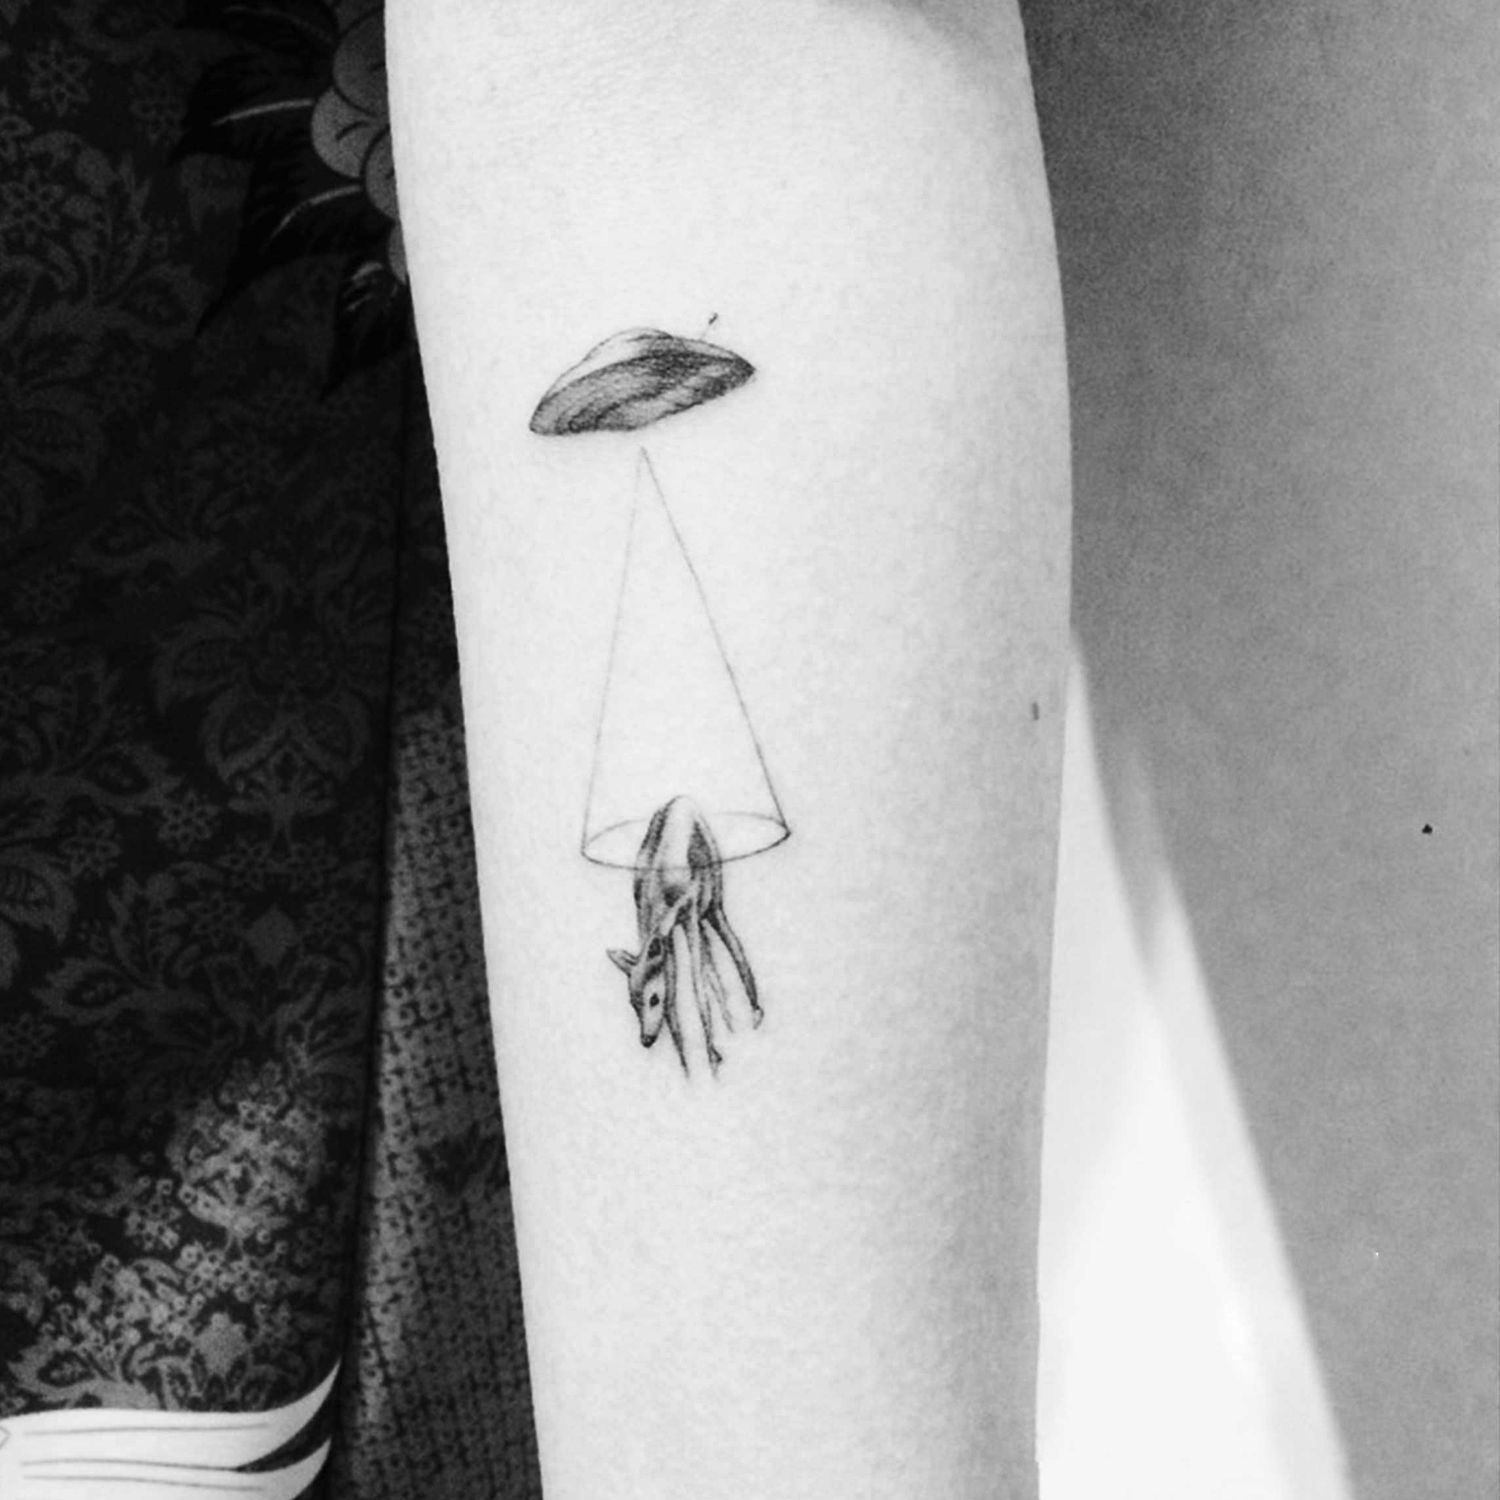 spaceship and deer, dotwork tattoo